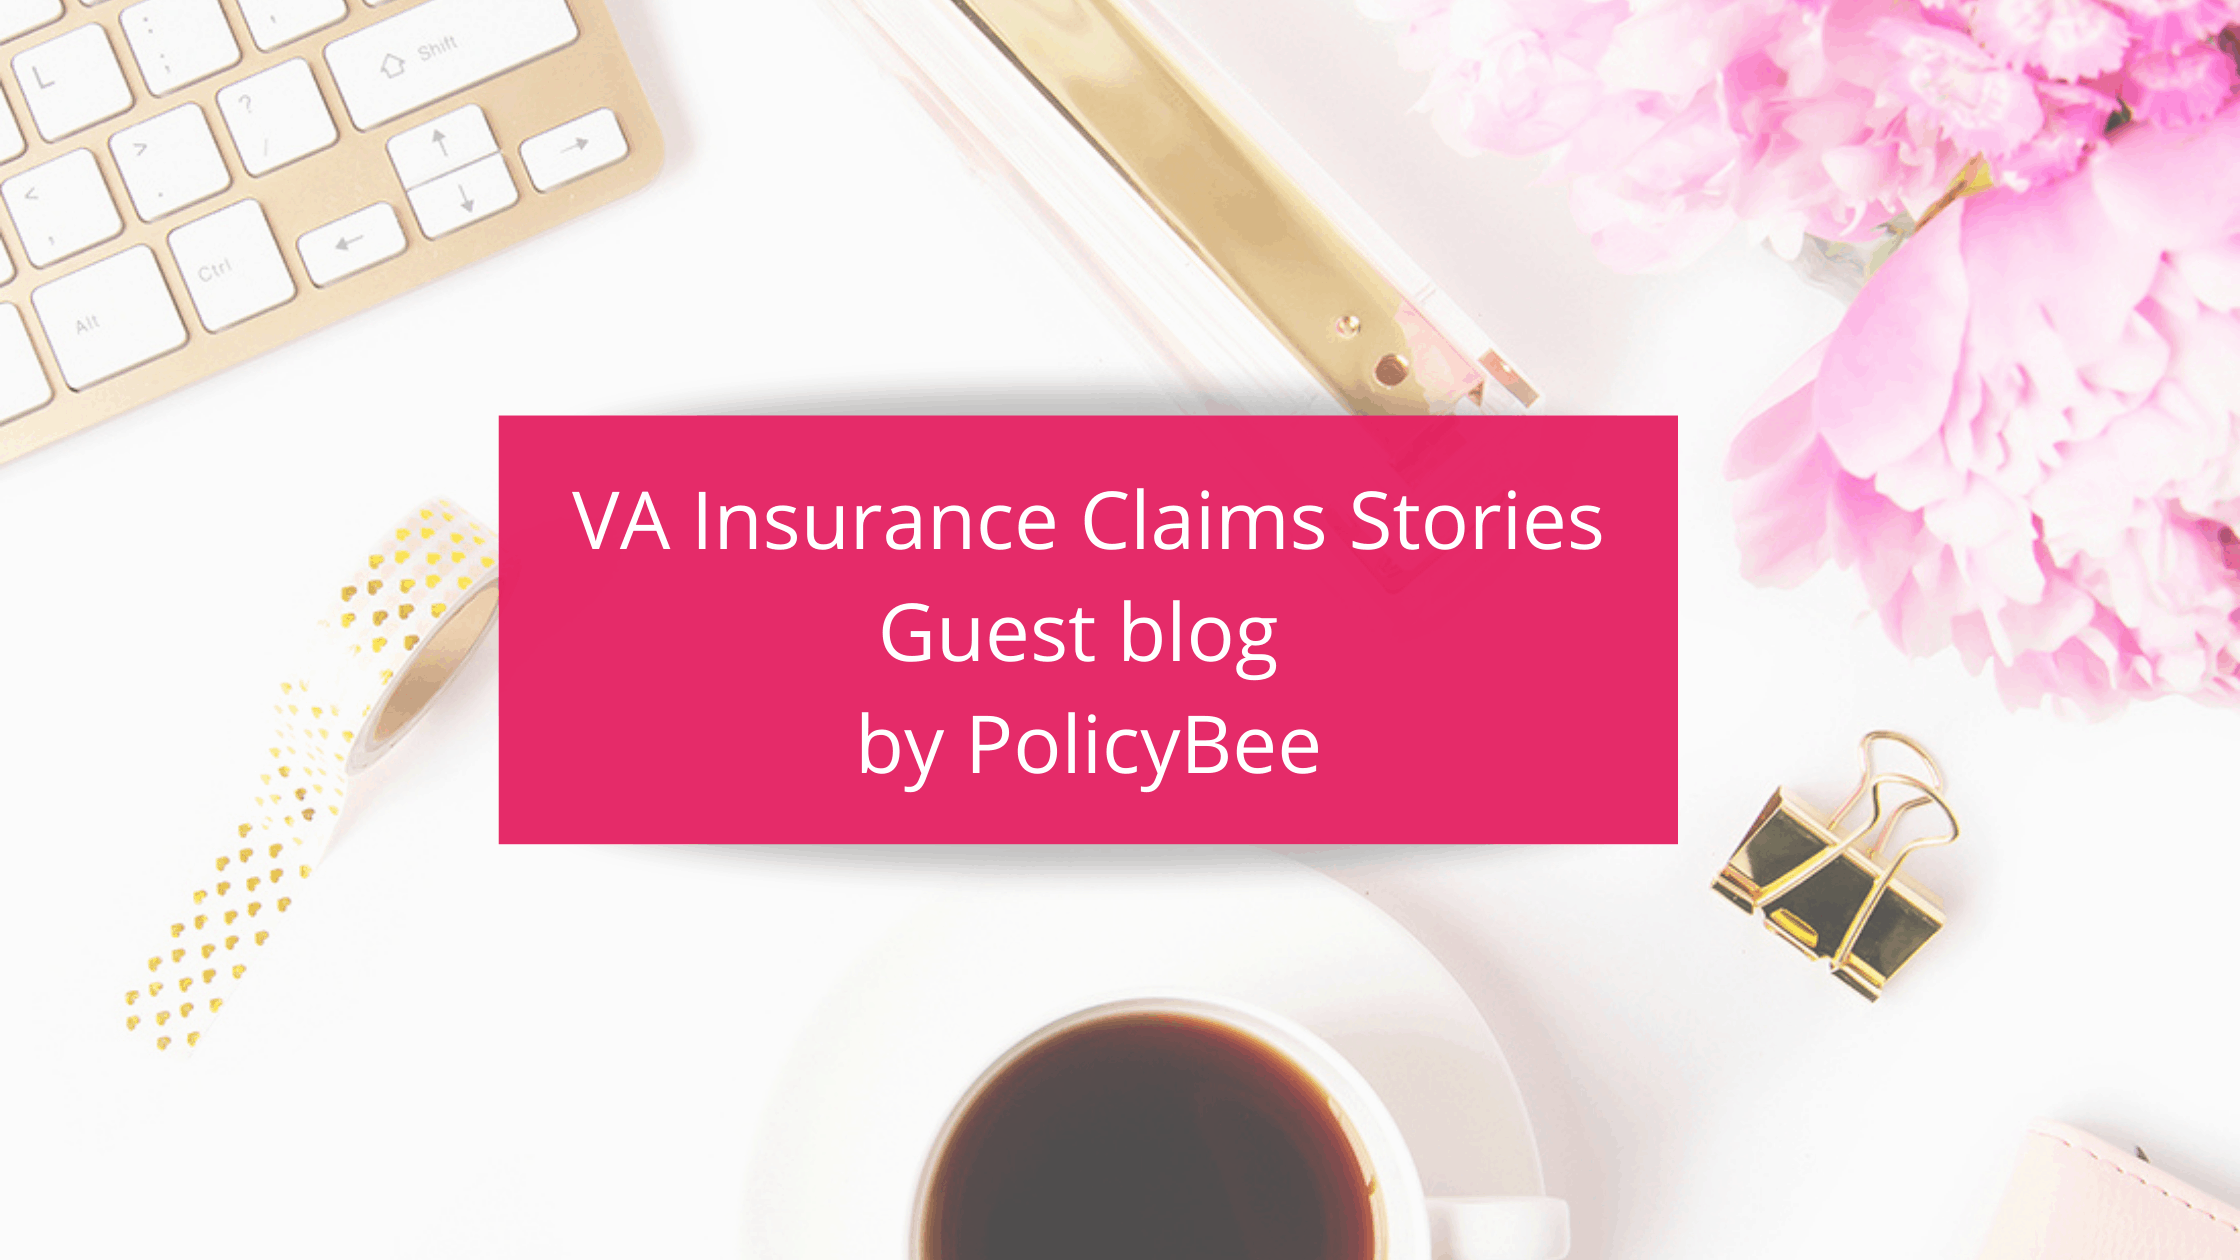 VA Insurance Claims Stories Blog Graphic